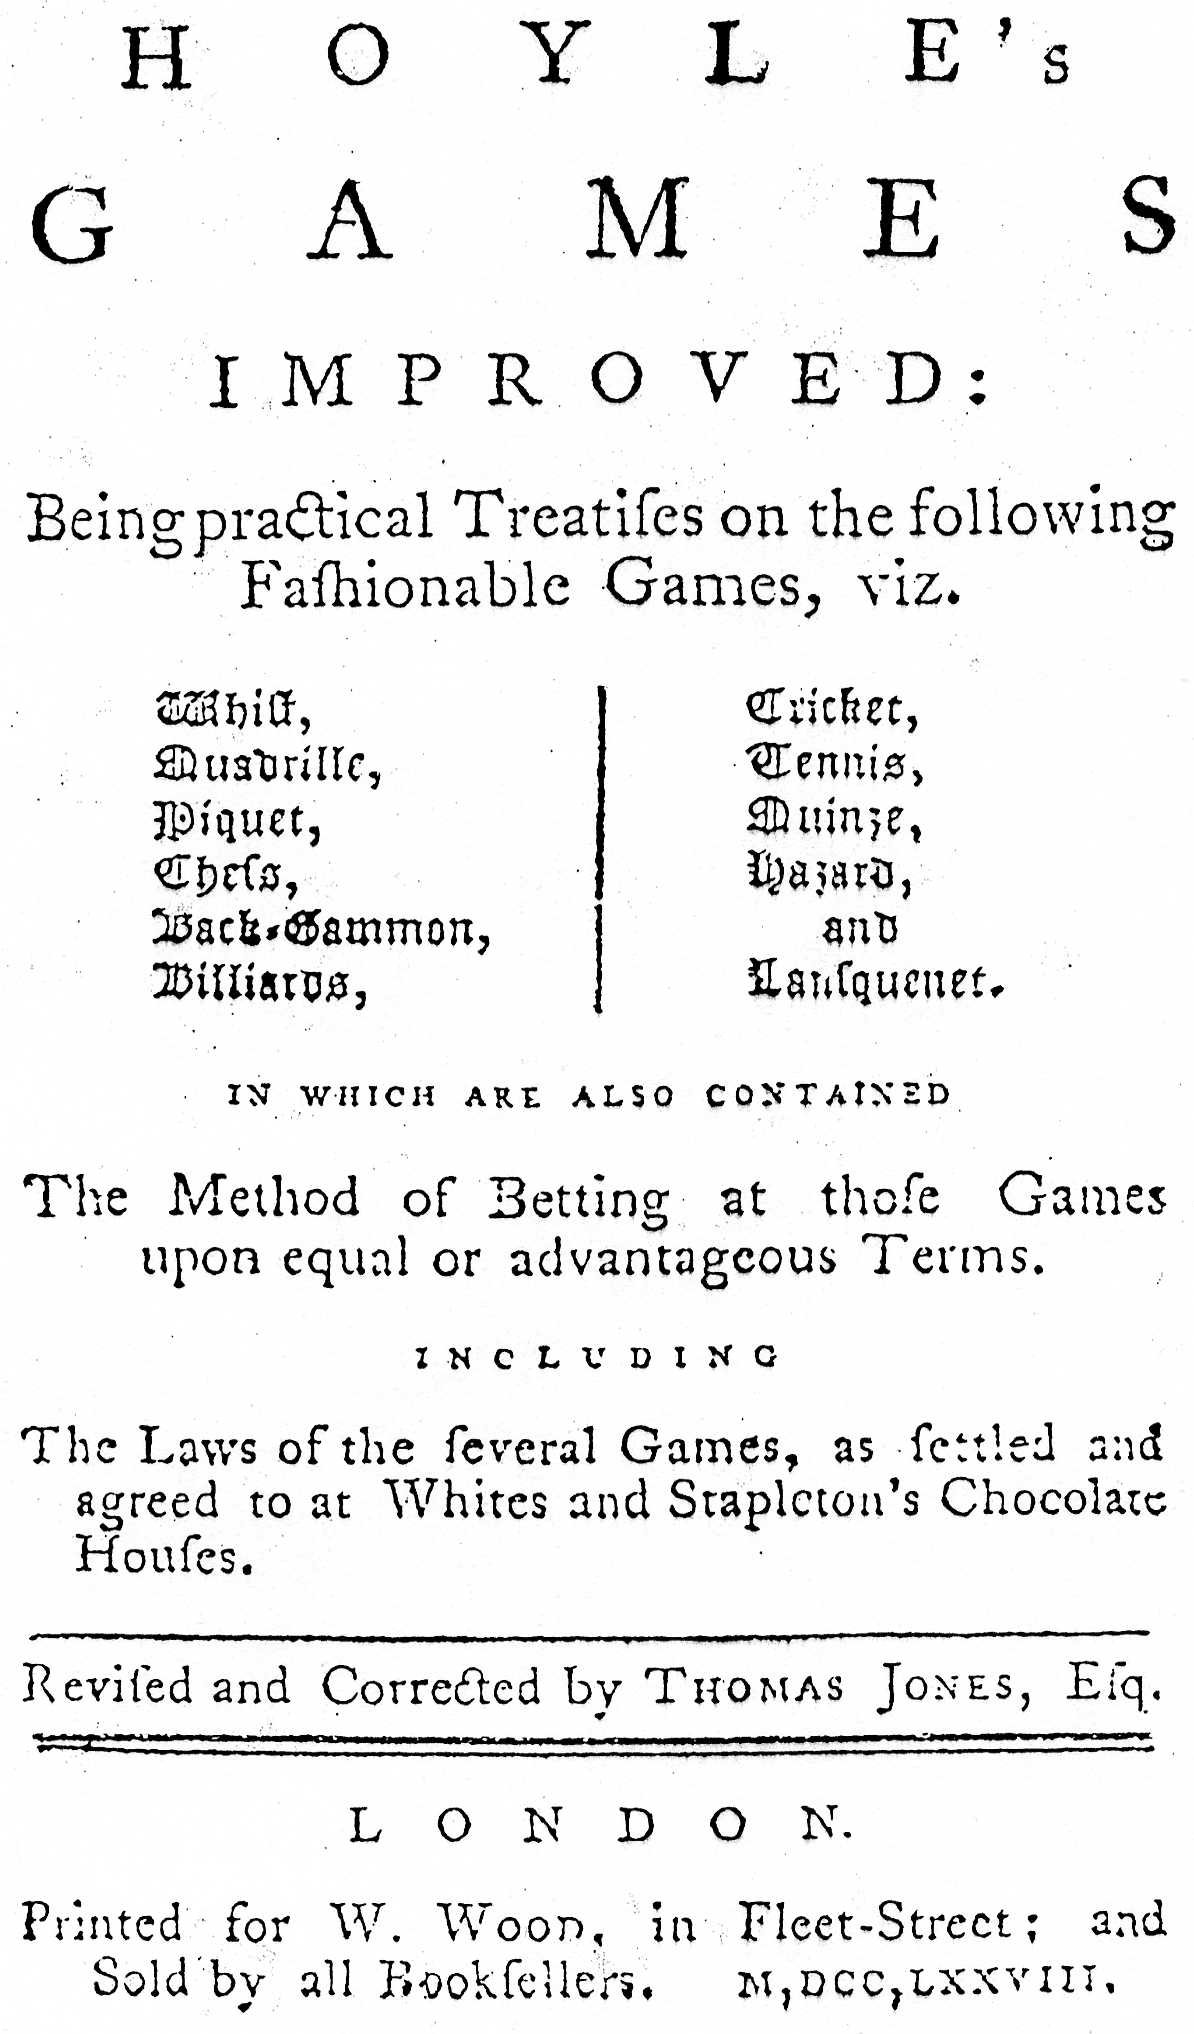 Hoyle's Games Improved, London, 1778